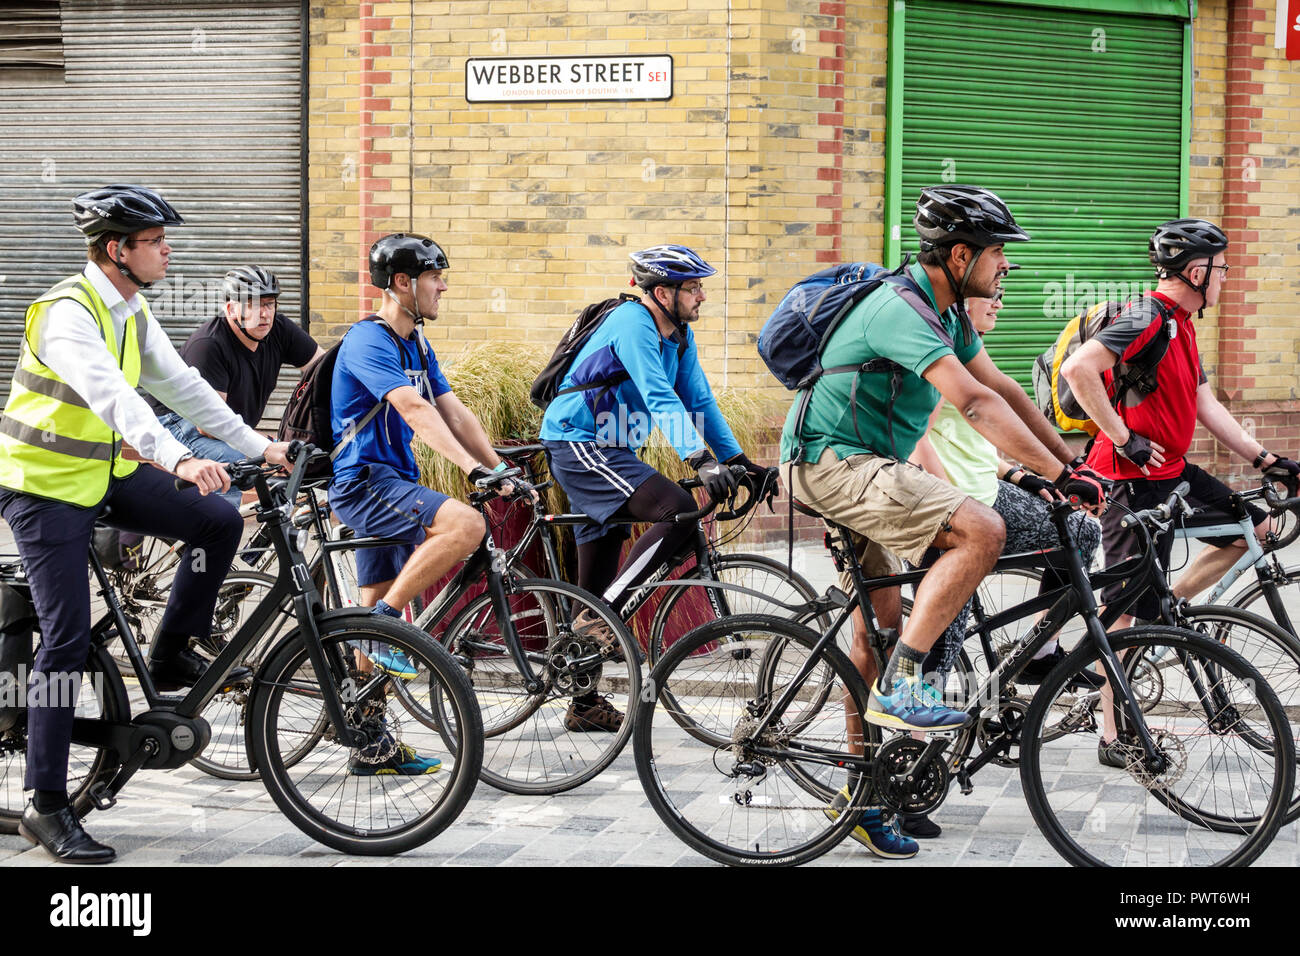 London England,UK,Lambeth,Webber Street,bicycle bicycles bicycling riding biking rider riders bike bikes,bike lane,work commuters,riding riders,bicycl Stock Photo